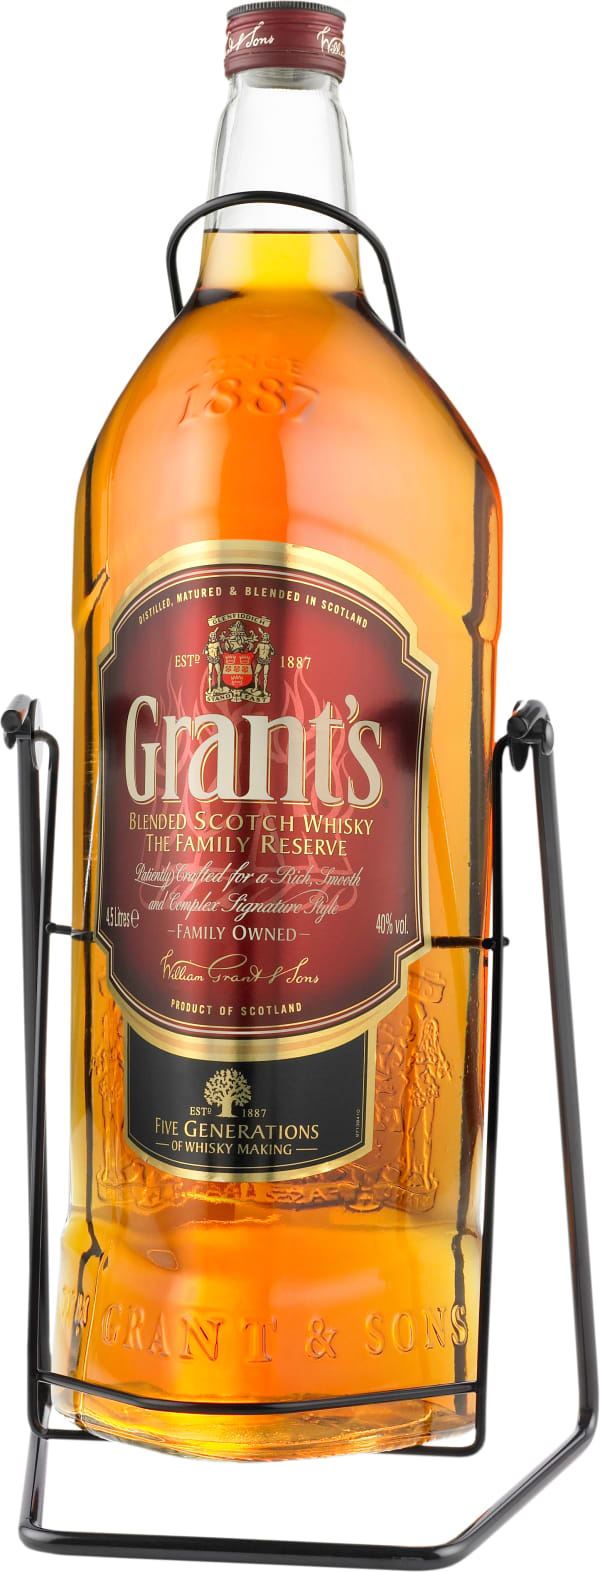 Виски качели 4.5 литра купить. Вильям Грантс виски. Виски Грантс Фамили резерв, 4,5л. Виски Грантс 4.5 литра. Виски Grants Blended Scotch Whisky.